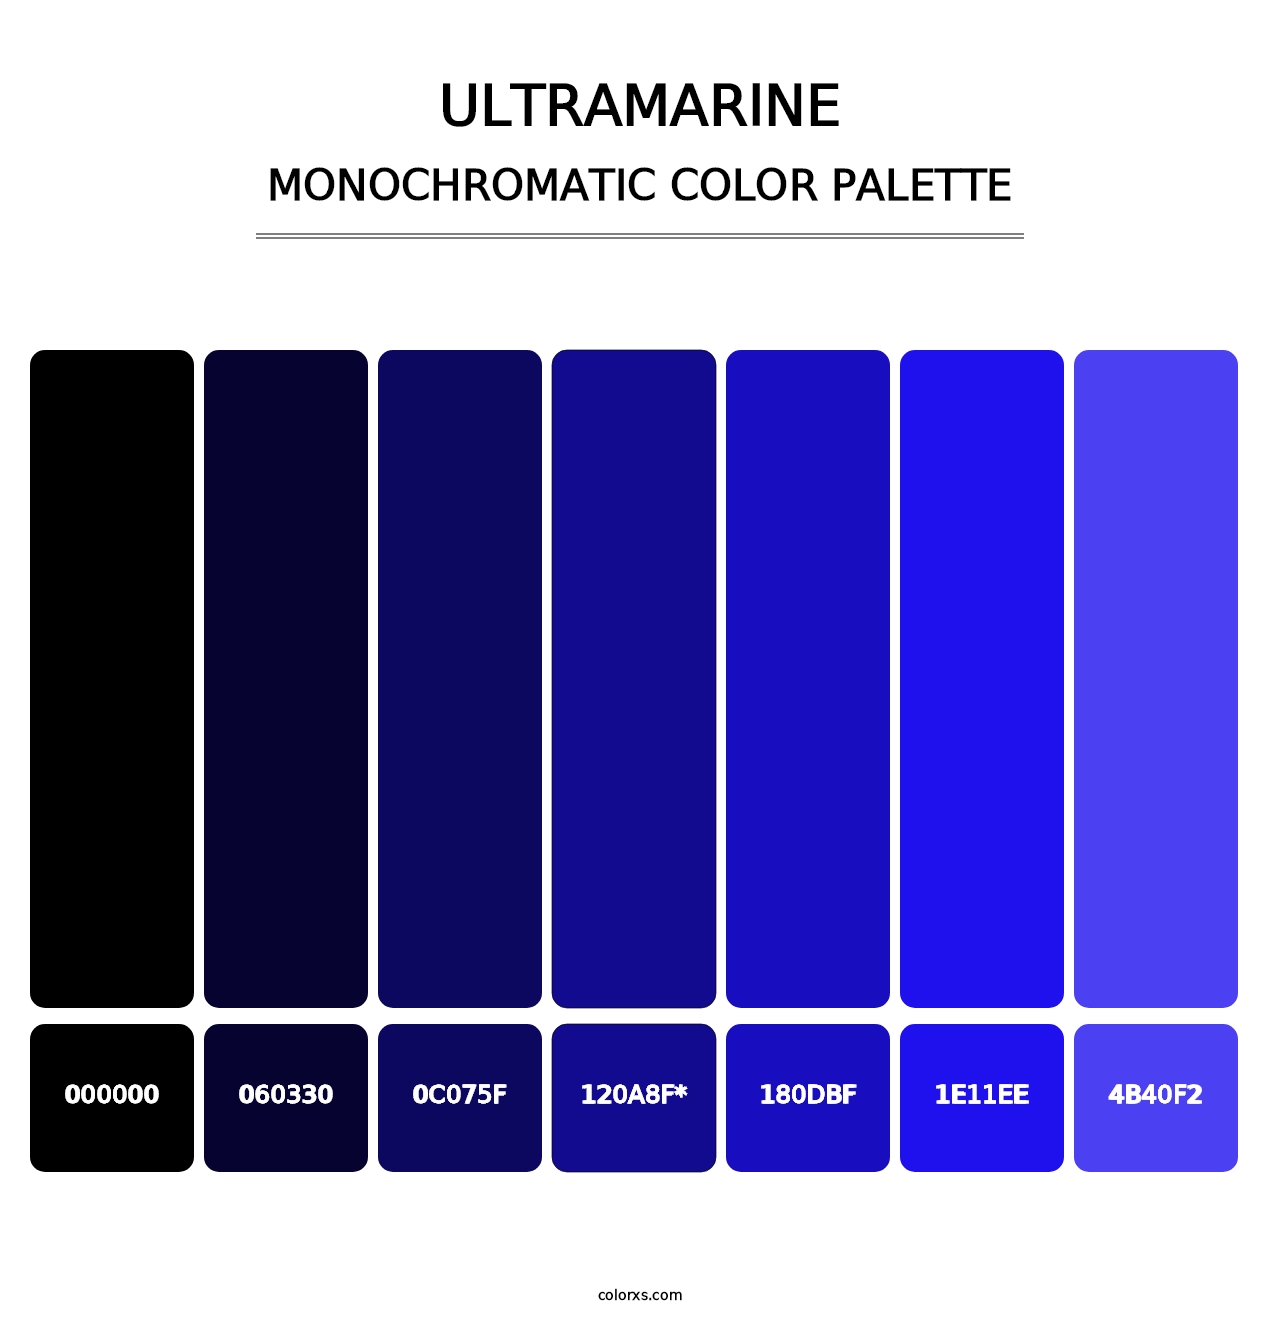 Ultramarine - Monochromatic Color Palette